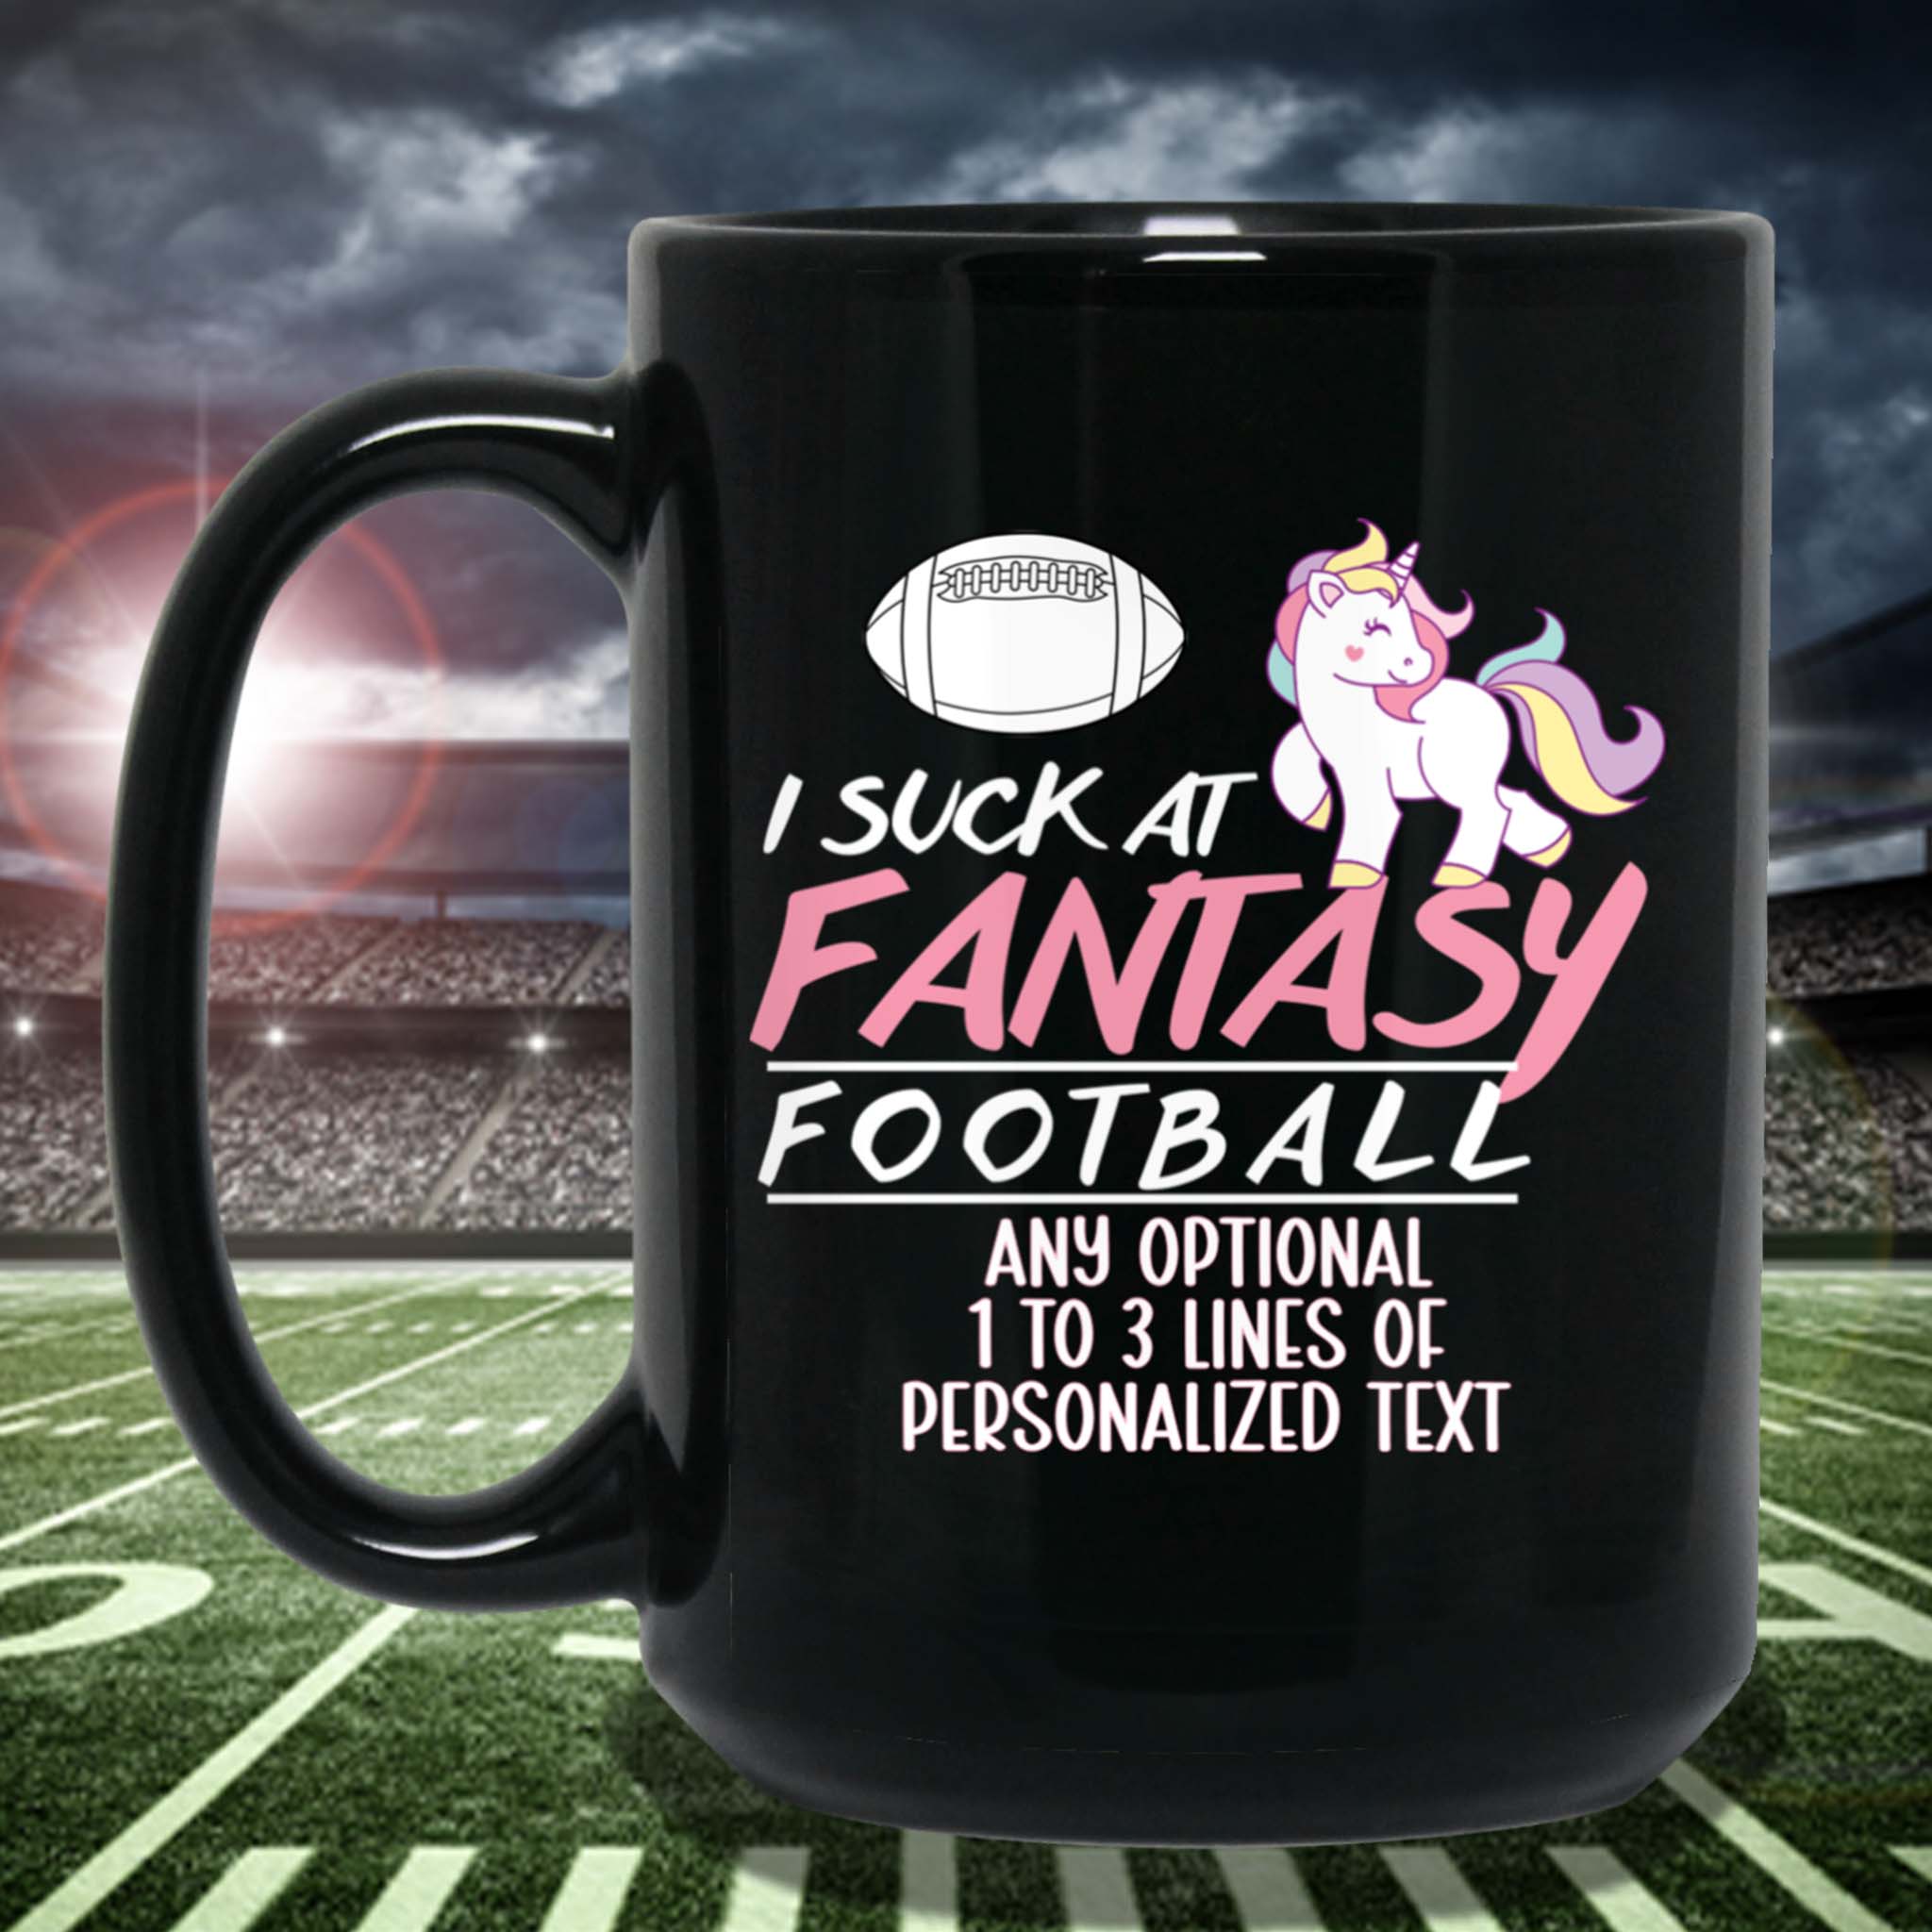 Fantasy Football - Customly Gifts